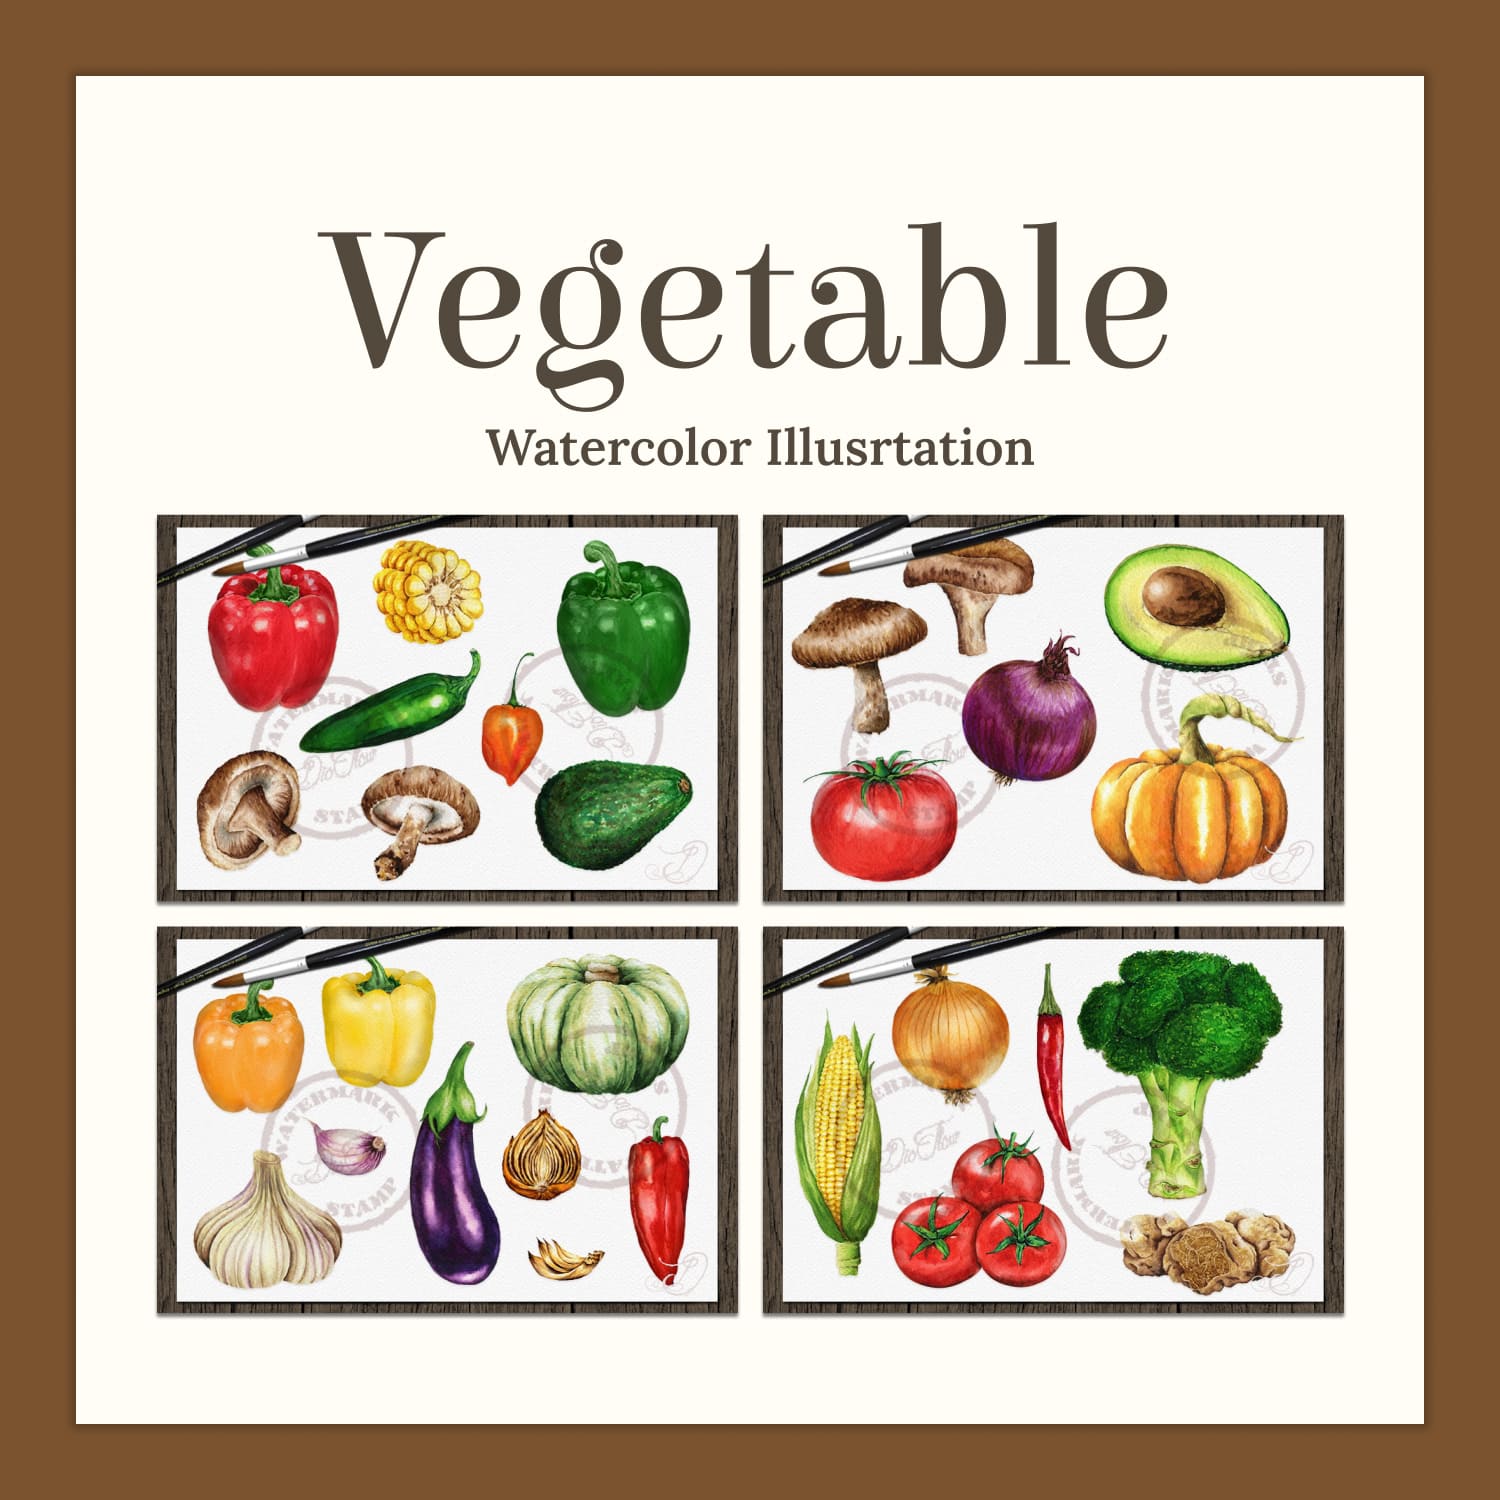 Vegetable watercolor illusrtation - main image preview.